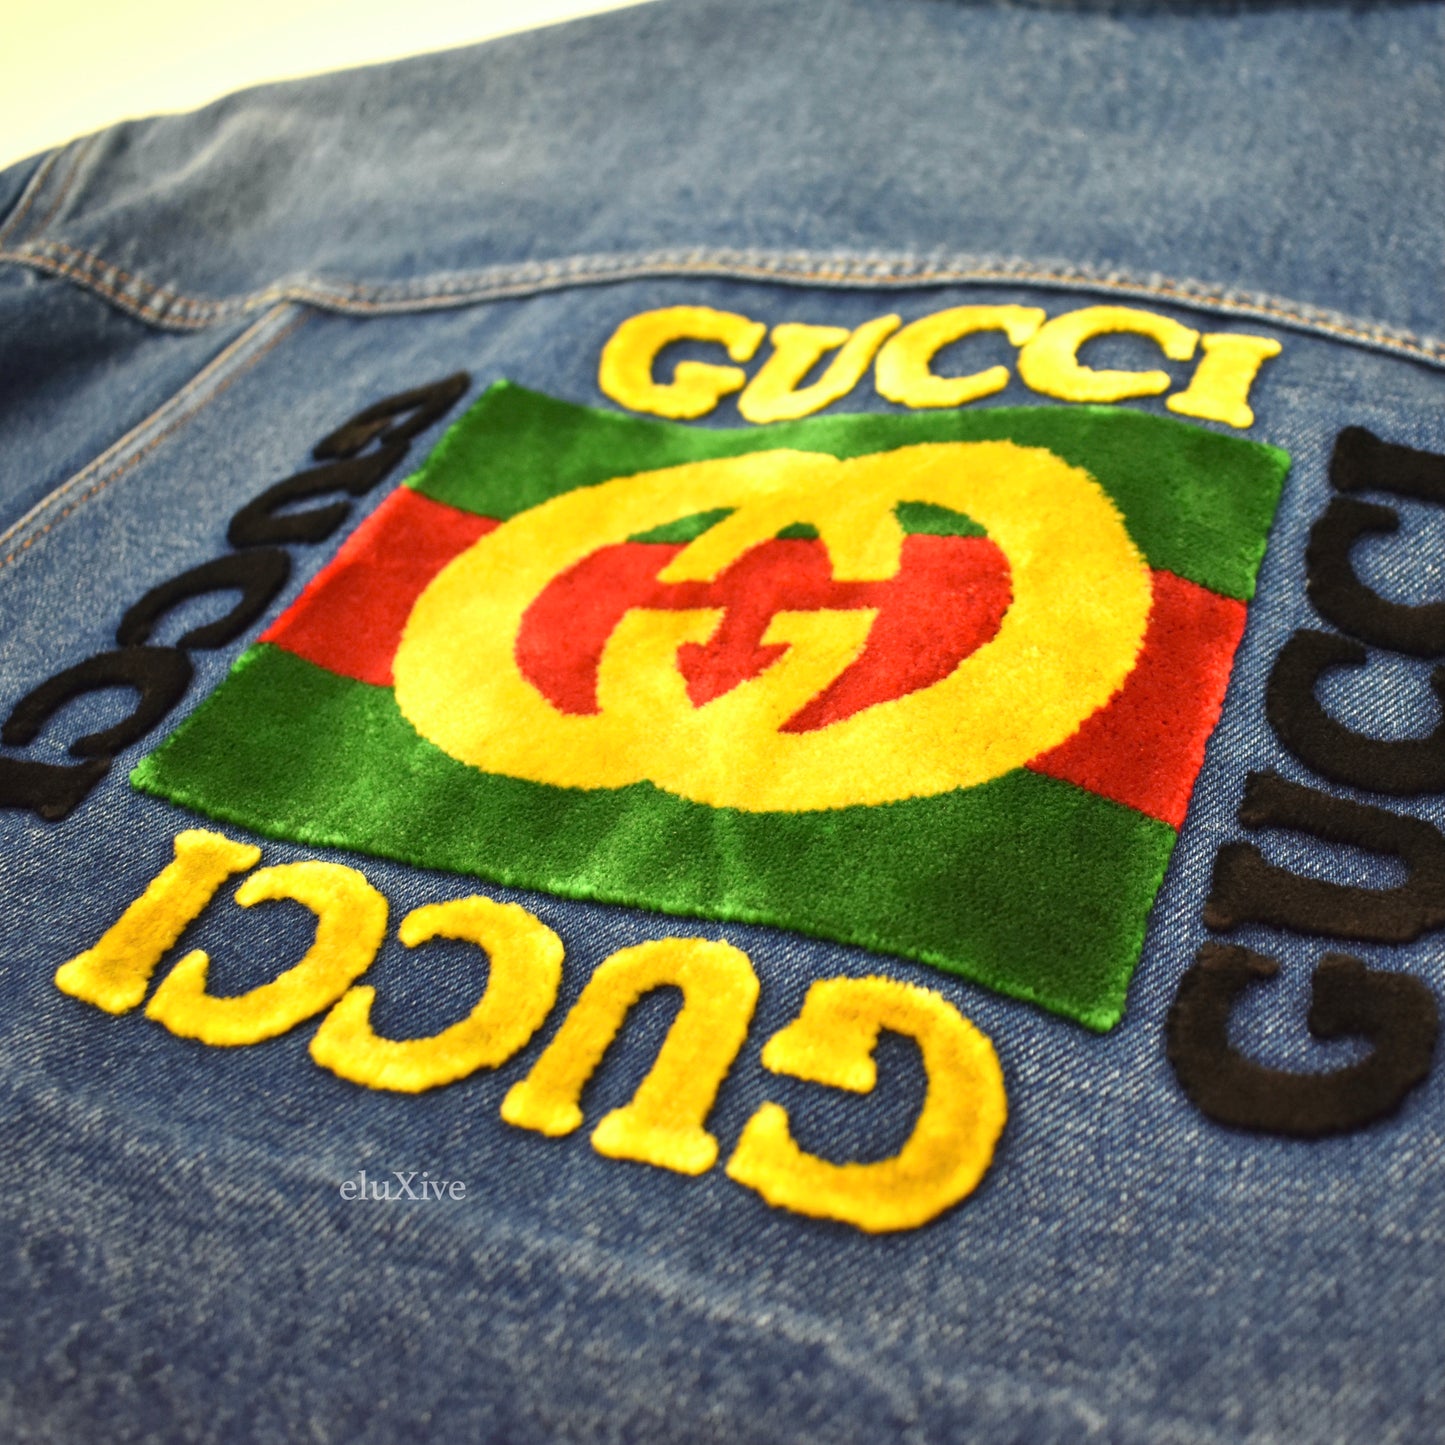 Gucci - Vintage Flocked Logo Denim Trucker Jacket